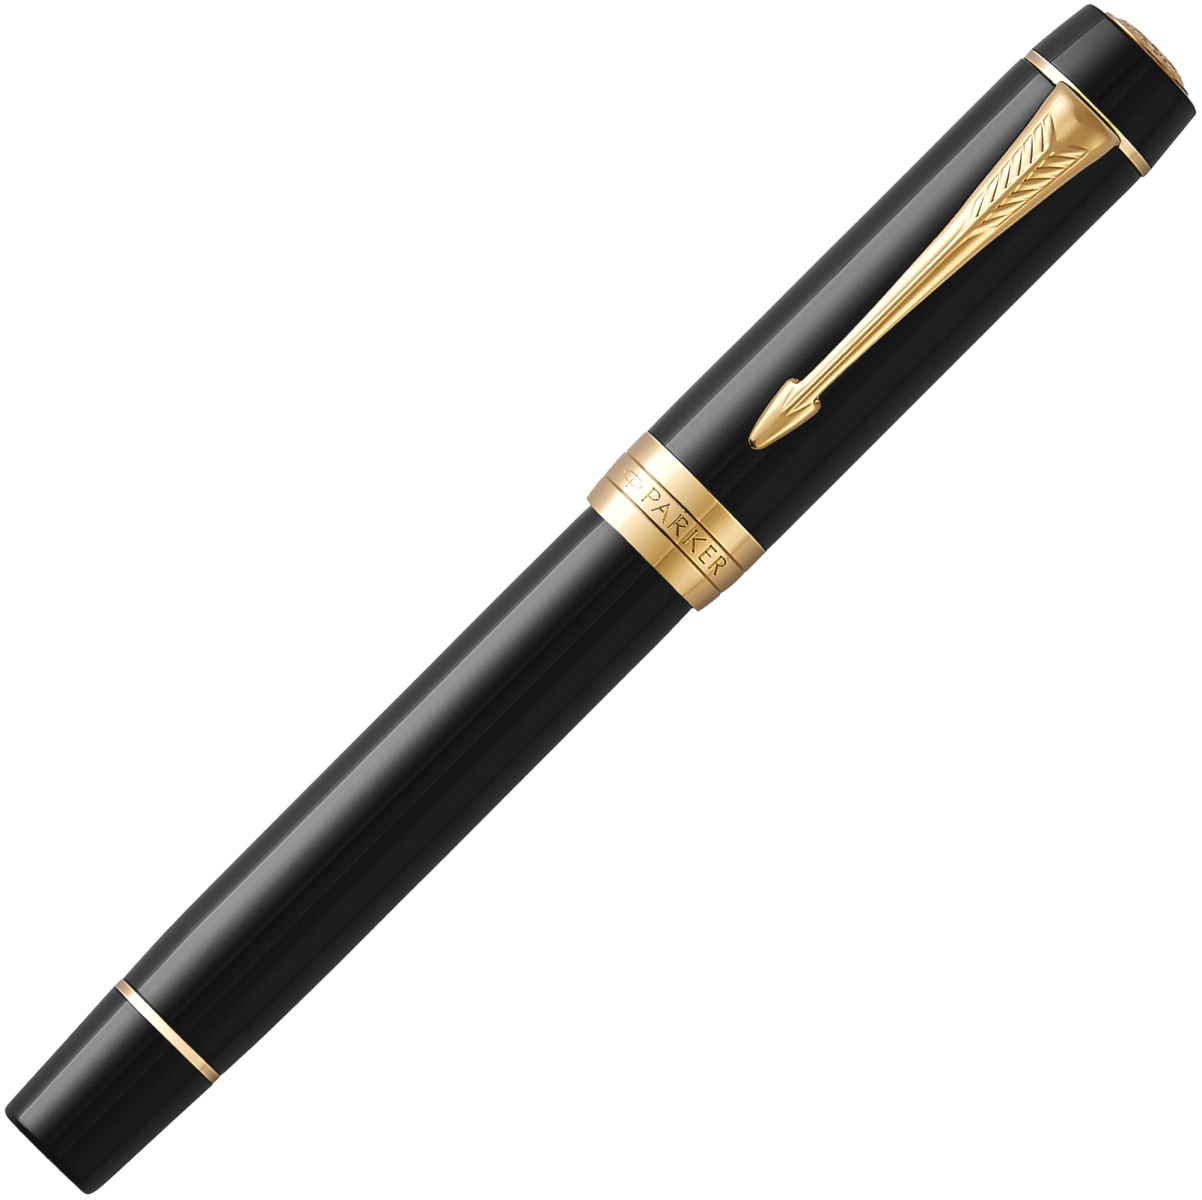  Перьевая ручка Parker Duofold Classic Centennial F77, Black / Gold (Перо F), фото 2